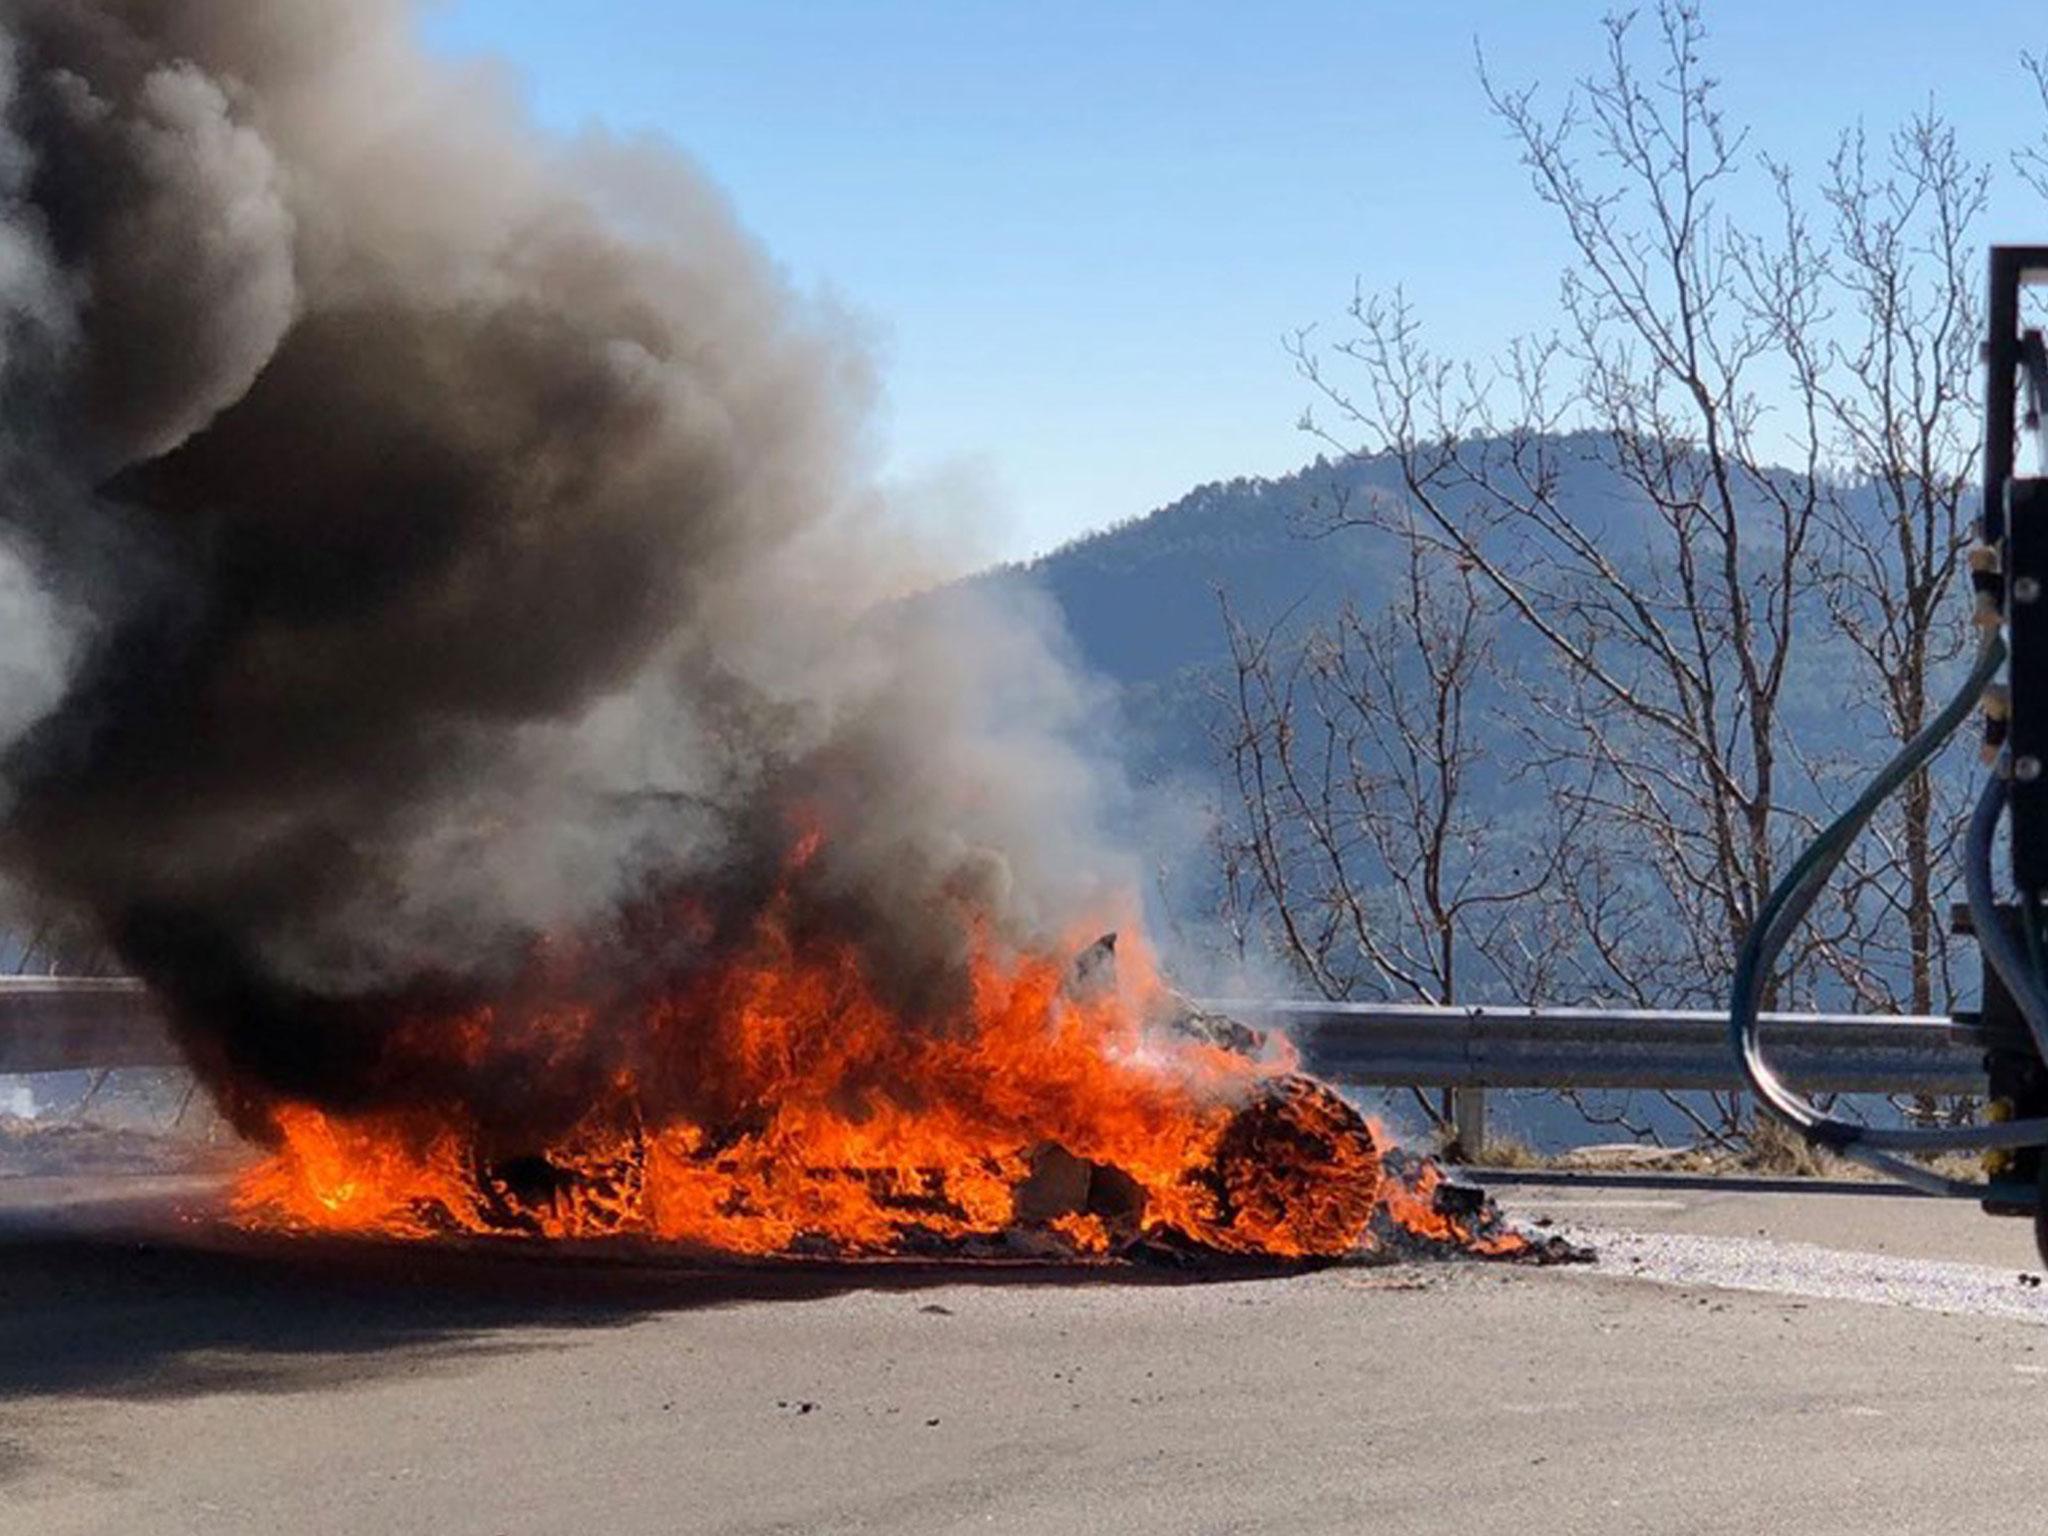 Chris Harris and Eddie Jordan's car caught fire during the Monte Carlo Rally